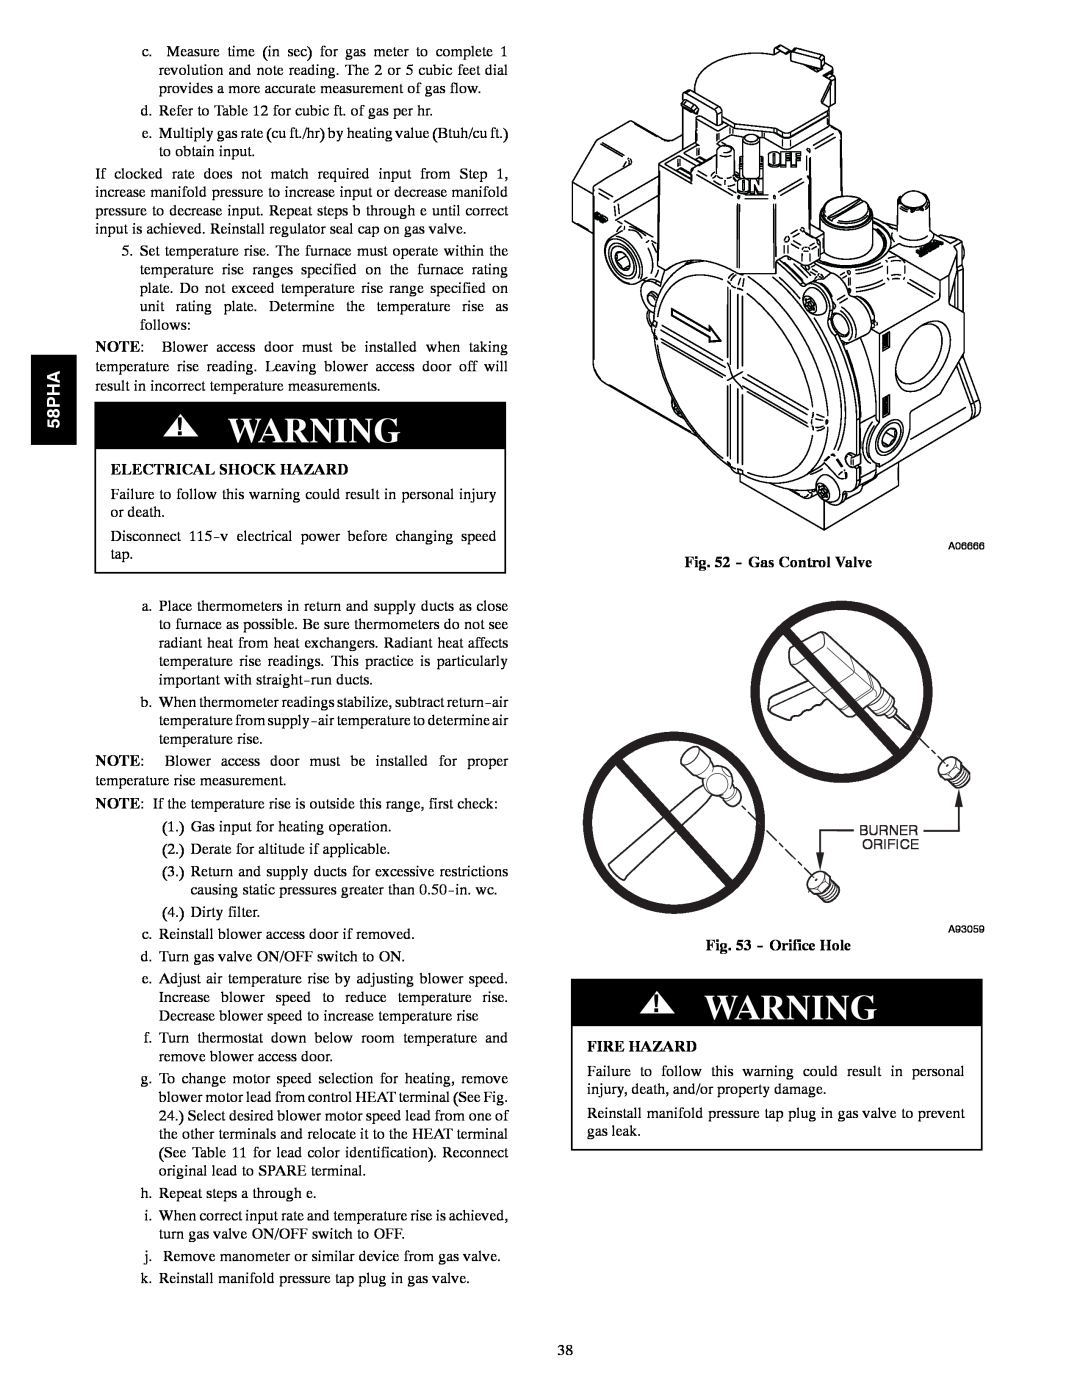 Carrier 58PHA/PHX instruction manual Electrical Shock Hazard, Gas Control Valve, Orifice Hole, Fire Hazard 